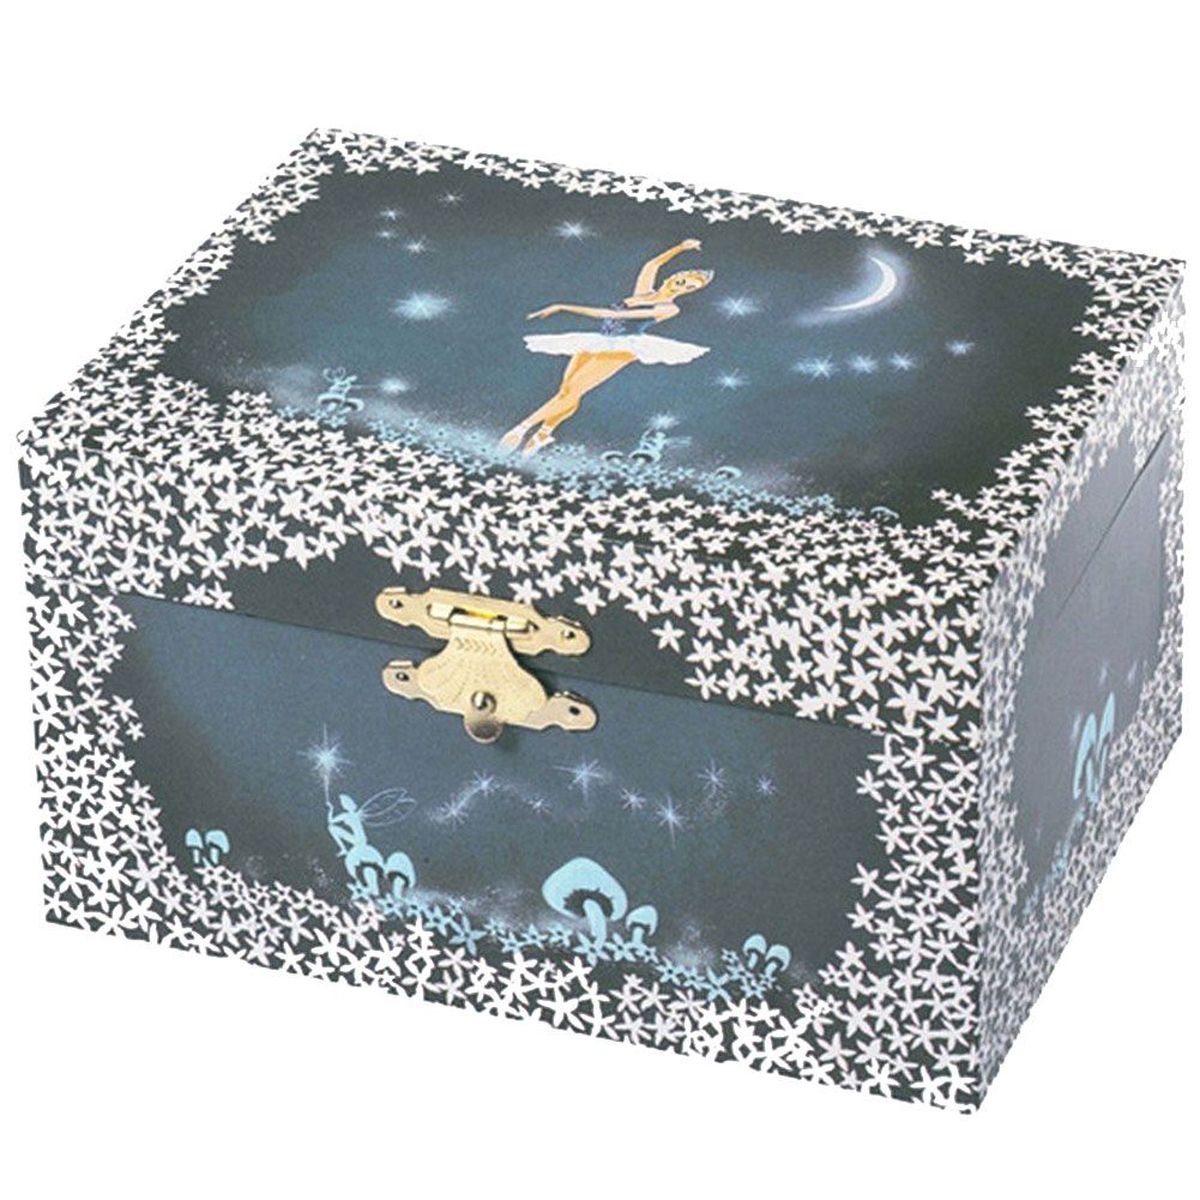 Dancer Ballerina jewelry box -  Phosphorescent